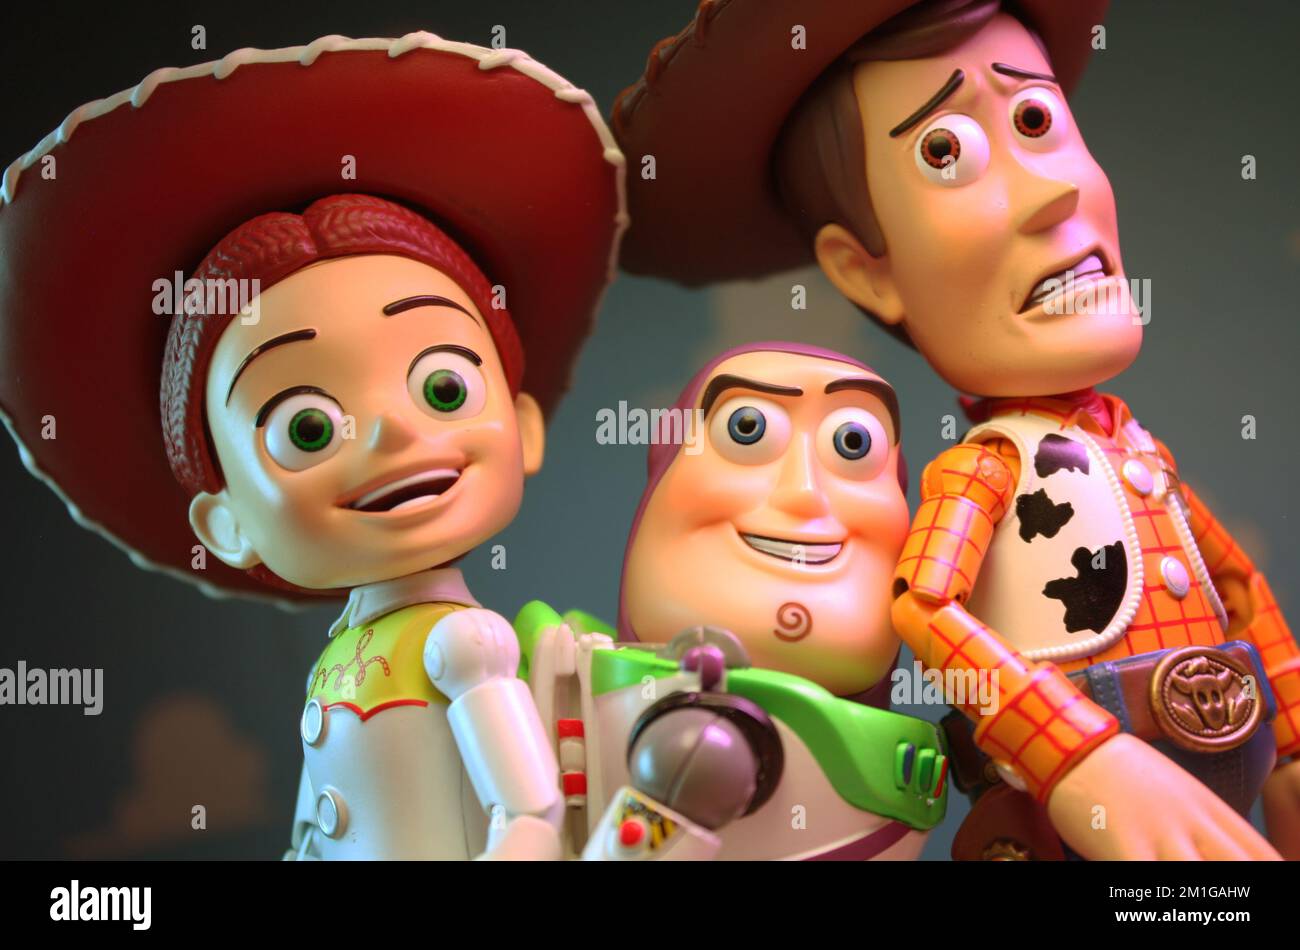 Download Jessie Toy Story Movie Poster Wallpaper